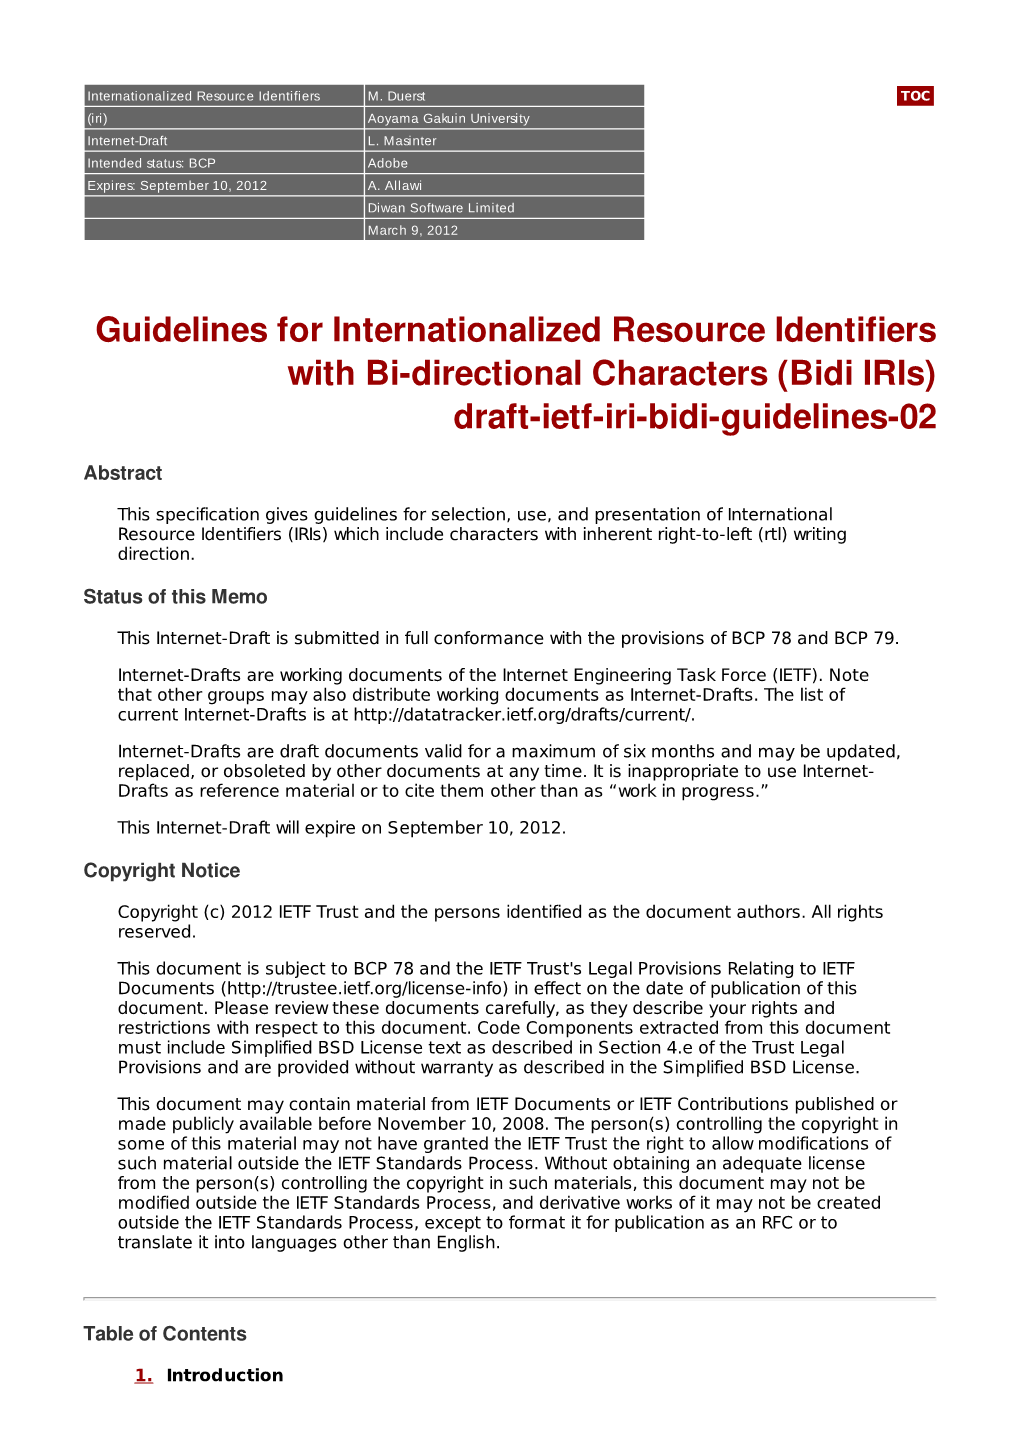 Guidelines for Internationalized Resource Identifiers with Bi-Directional Characters (Bidi Iris) Draft-Ietf-Iri-Bidi-Guidelines-02